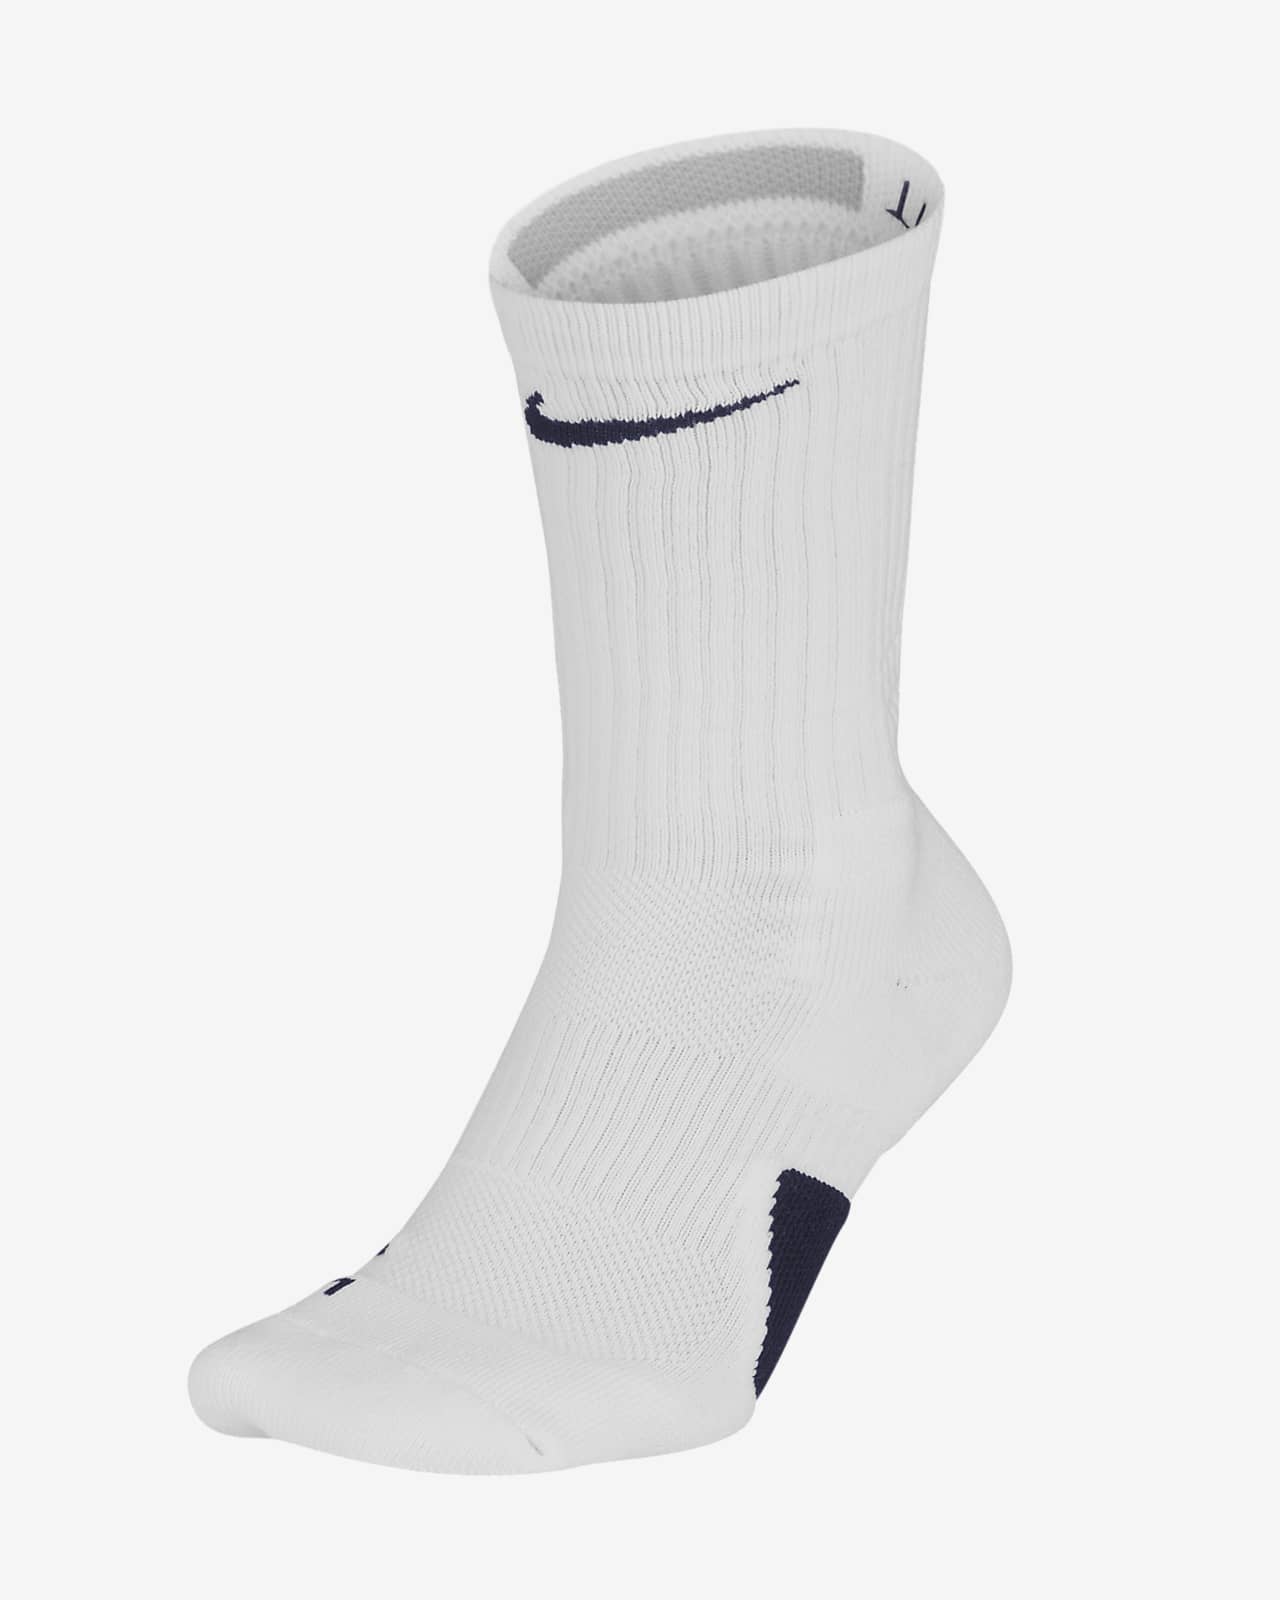 Nike Elite Basketball Socks.